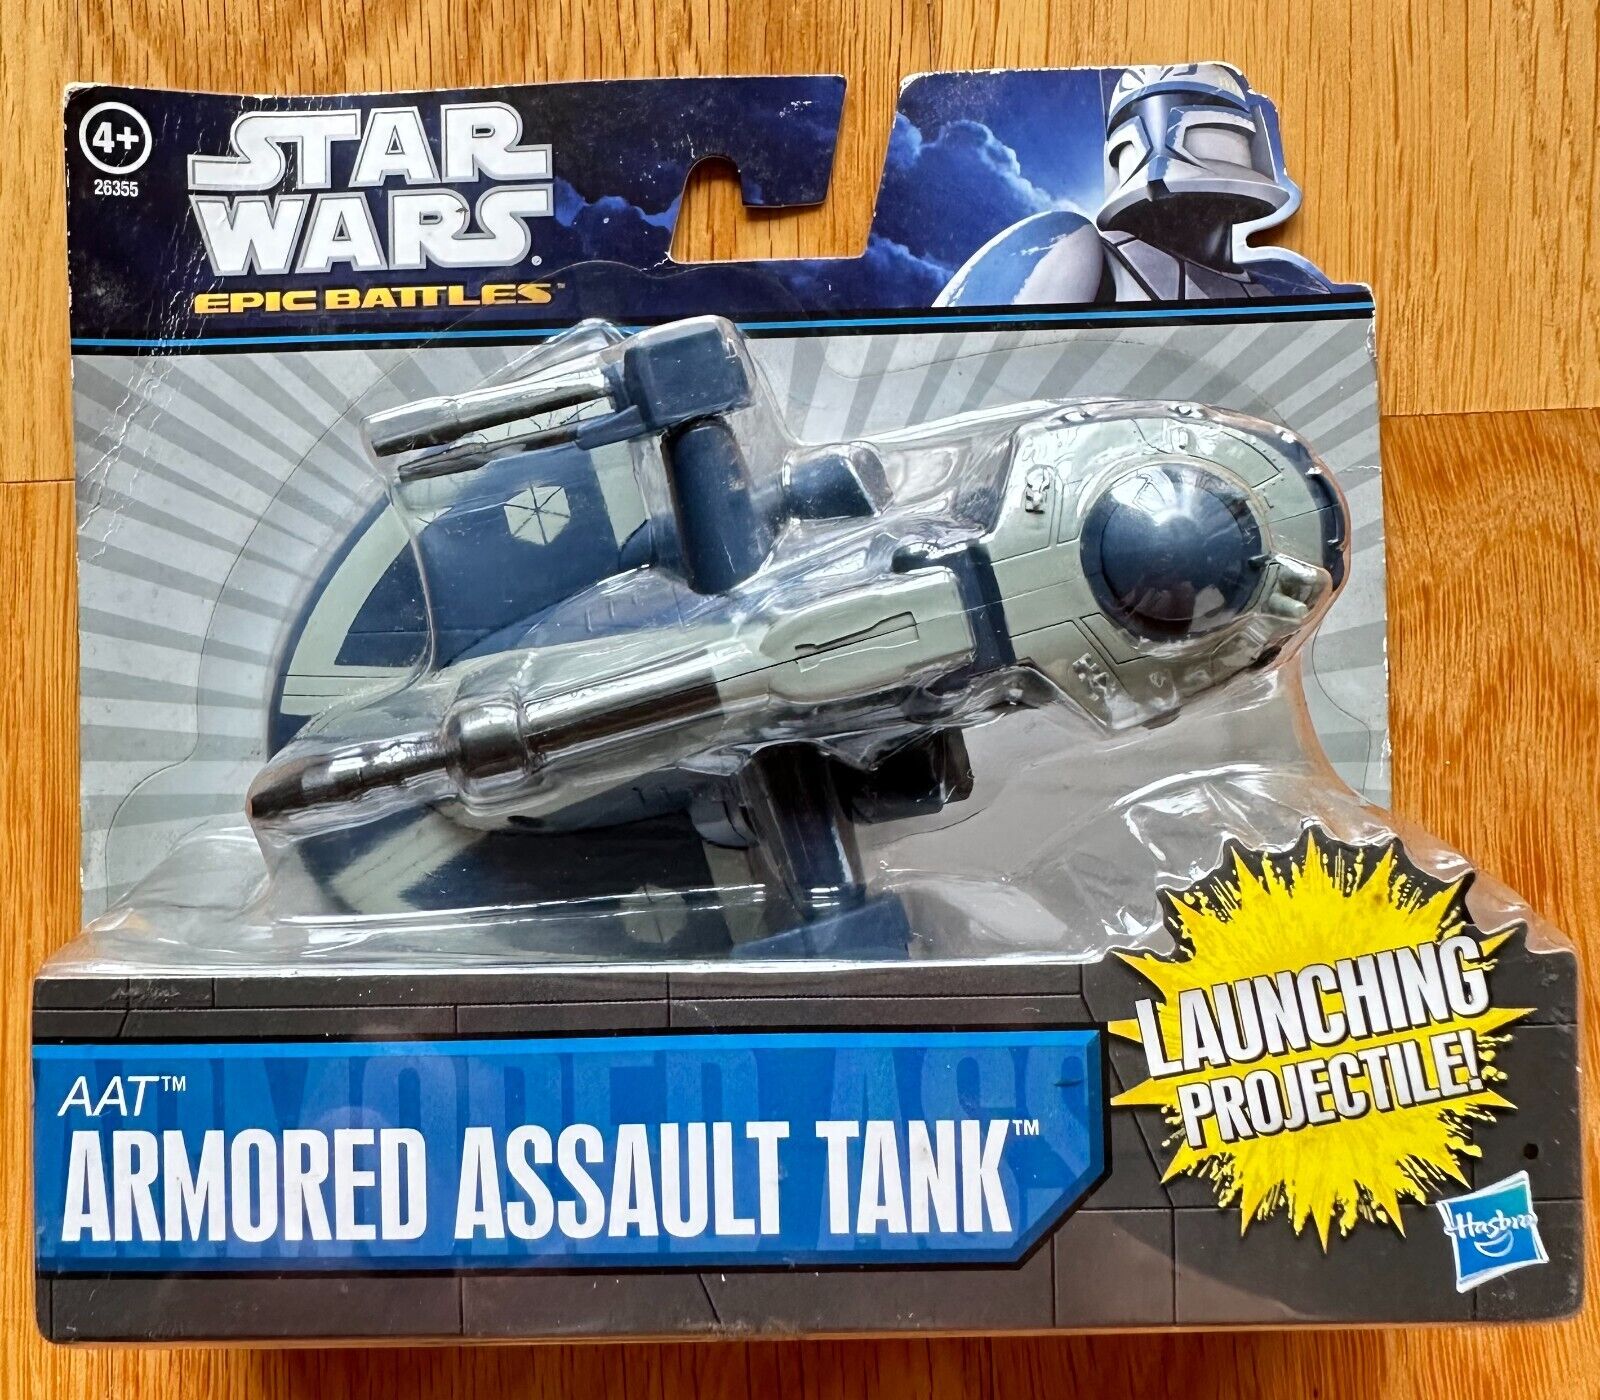 Star Wars Hasbro 2002 Trade Federation AAT (Armored Assault Tank) vehicle in box